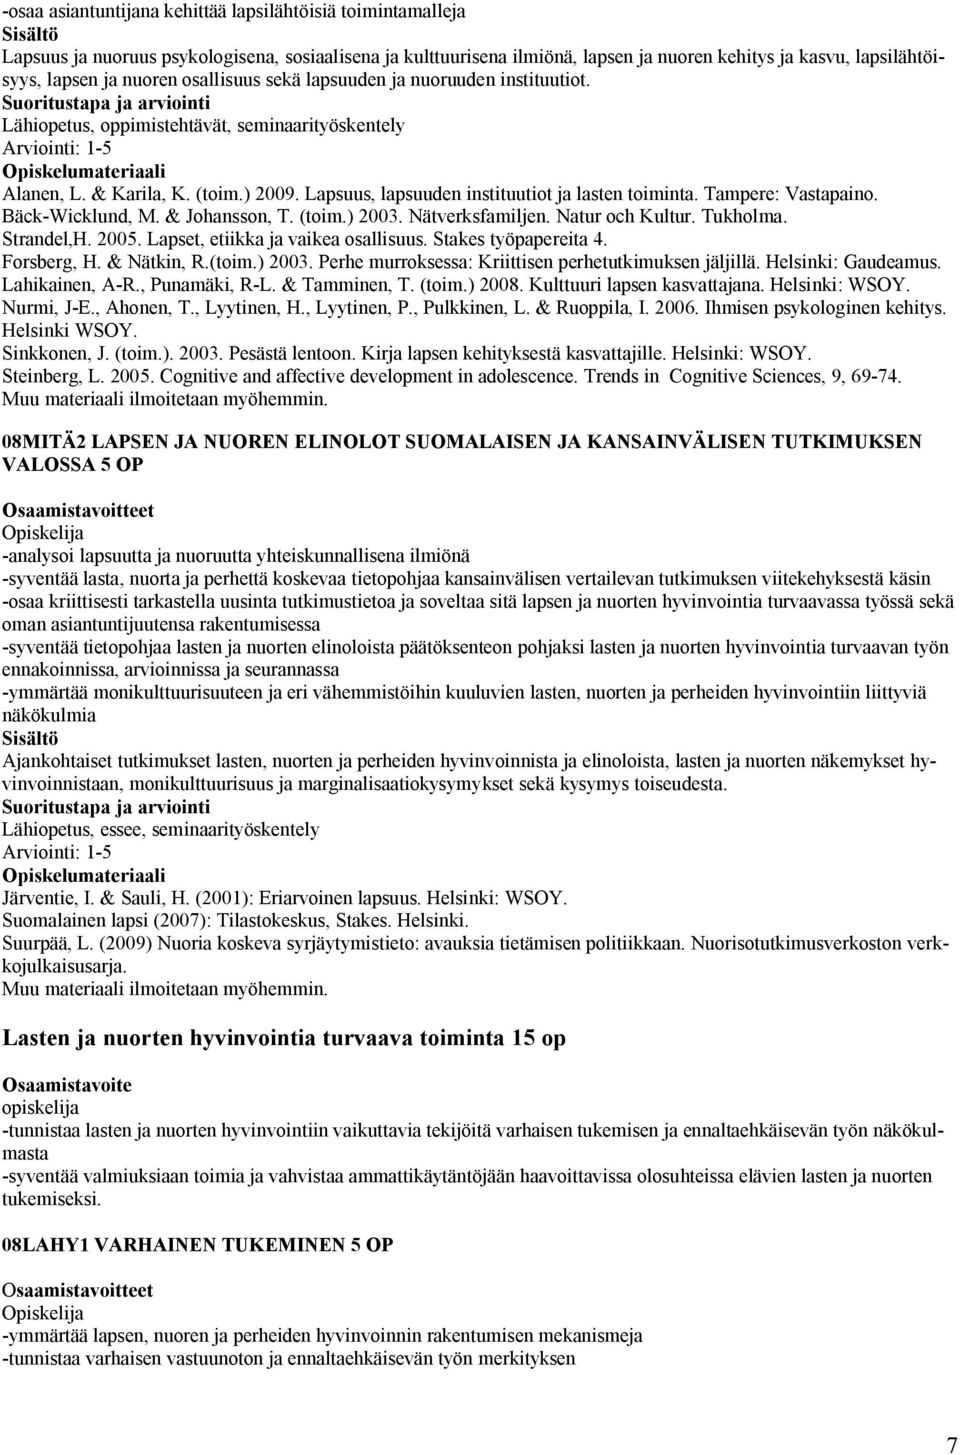 Lapsuus, lapsuuden instituutiot ja lasten toiminta. Tampere: Vastapaino. Bäck-Wicklund, M. & Johansson, T. (toim.) 2003. Nätverksfamiljen. Natur och Kultur. Tukholma. Strandel,H. 2005.